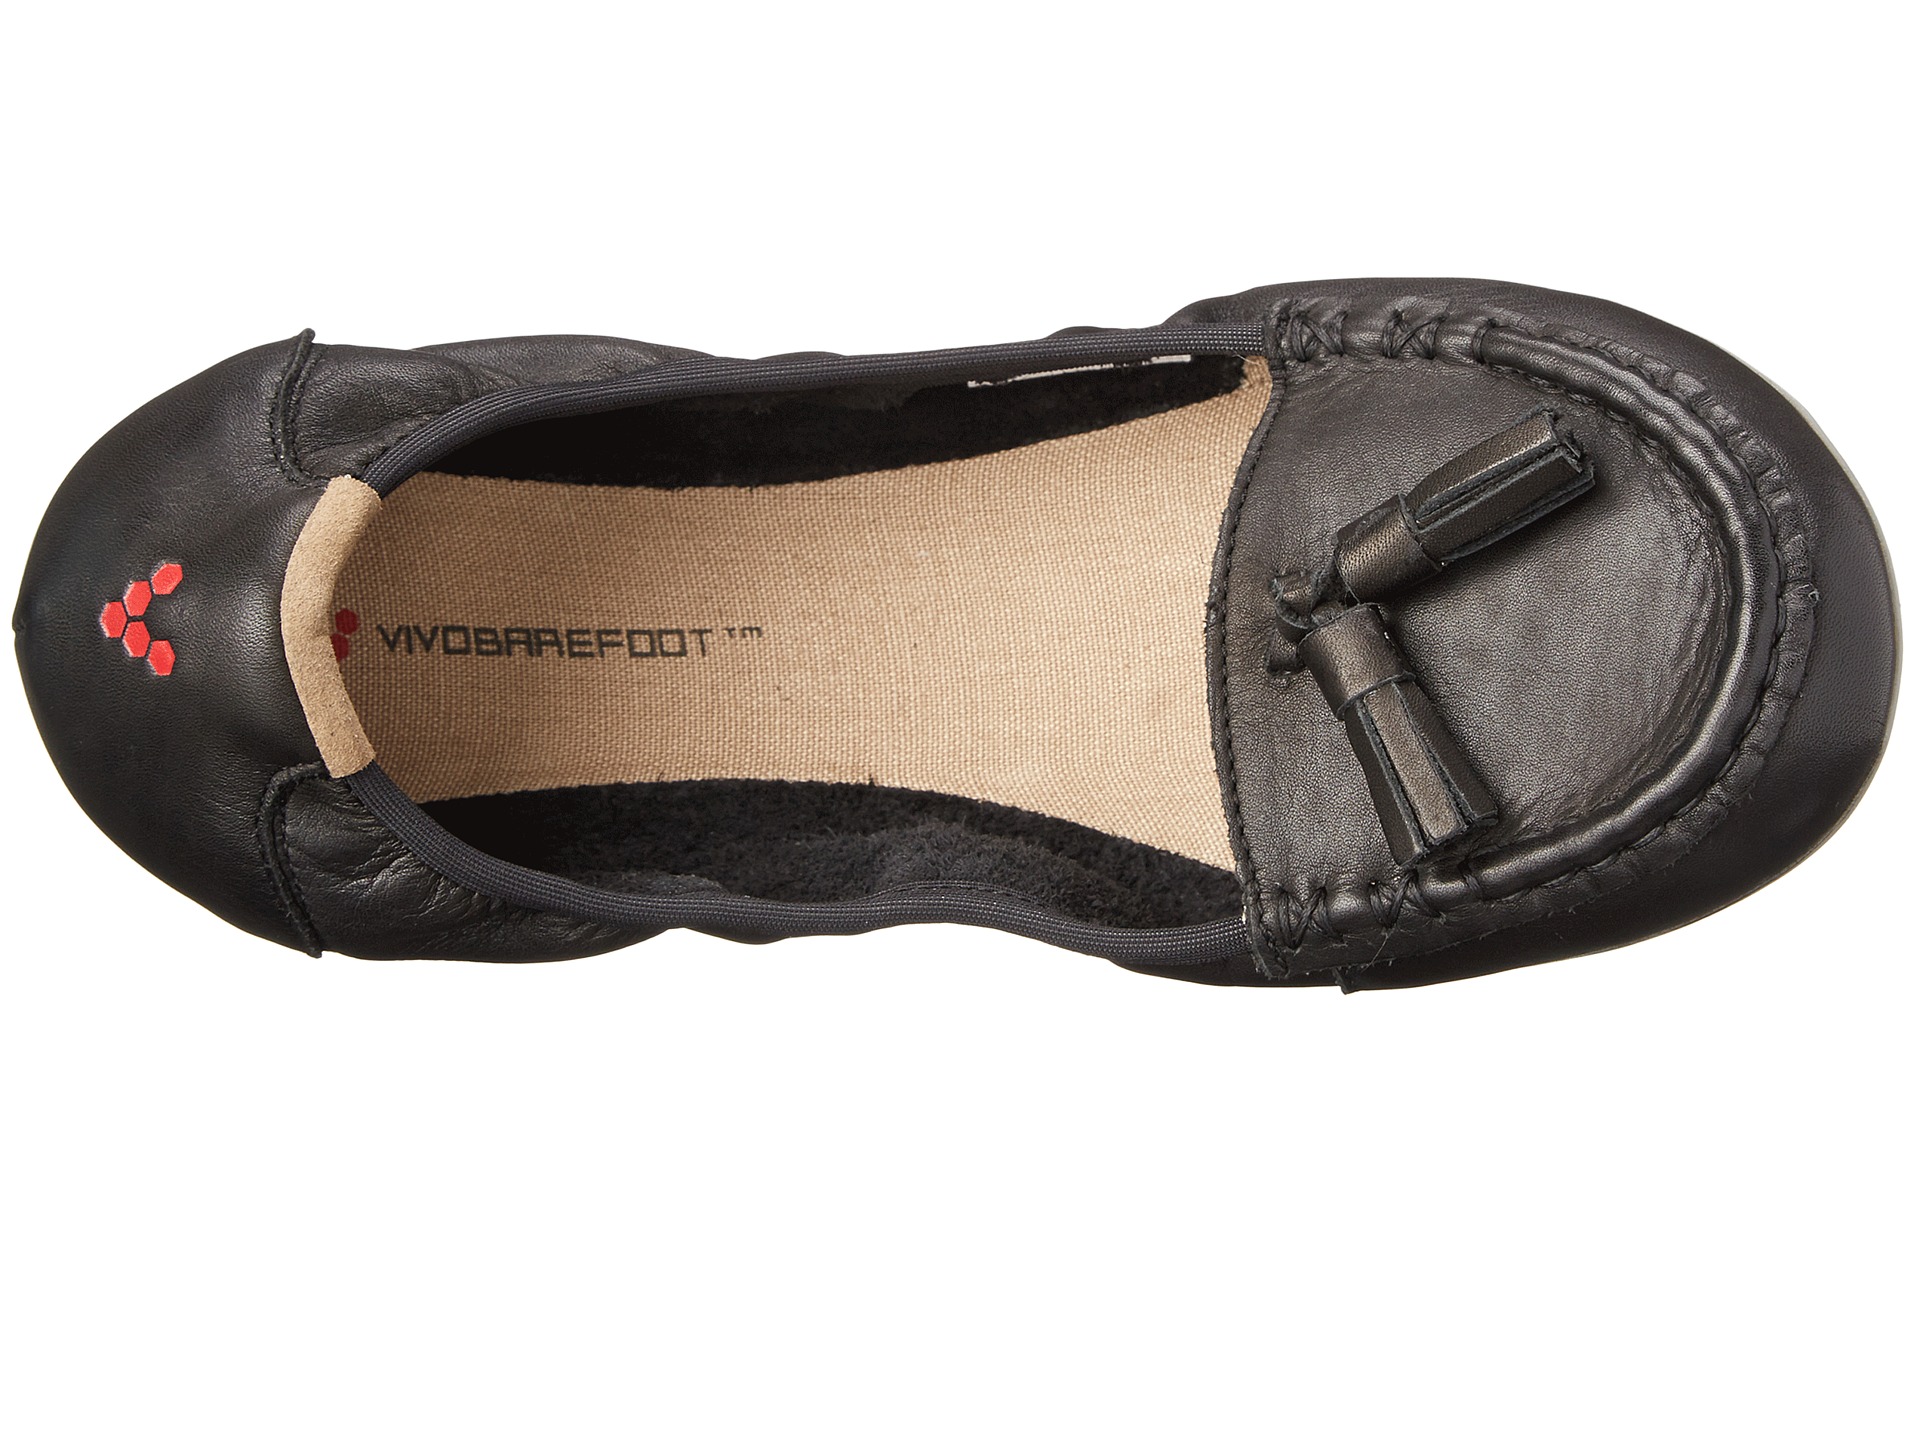 Vivobarefoot Penny Black Leather - Zappos Free Shipping BOTH Ways